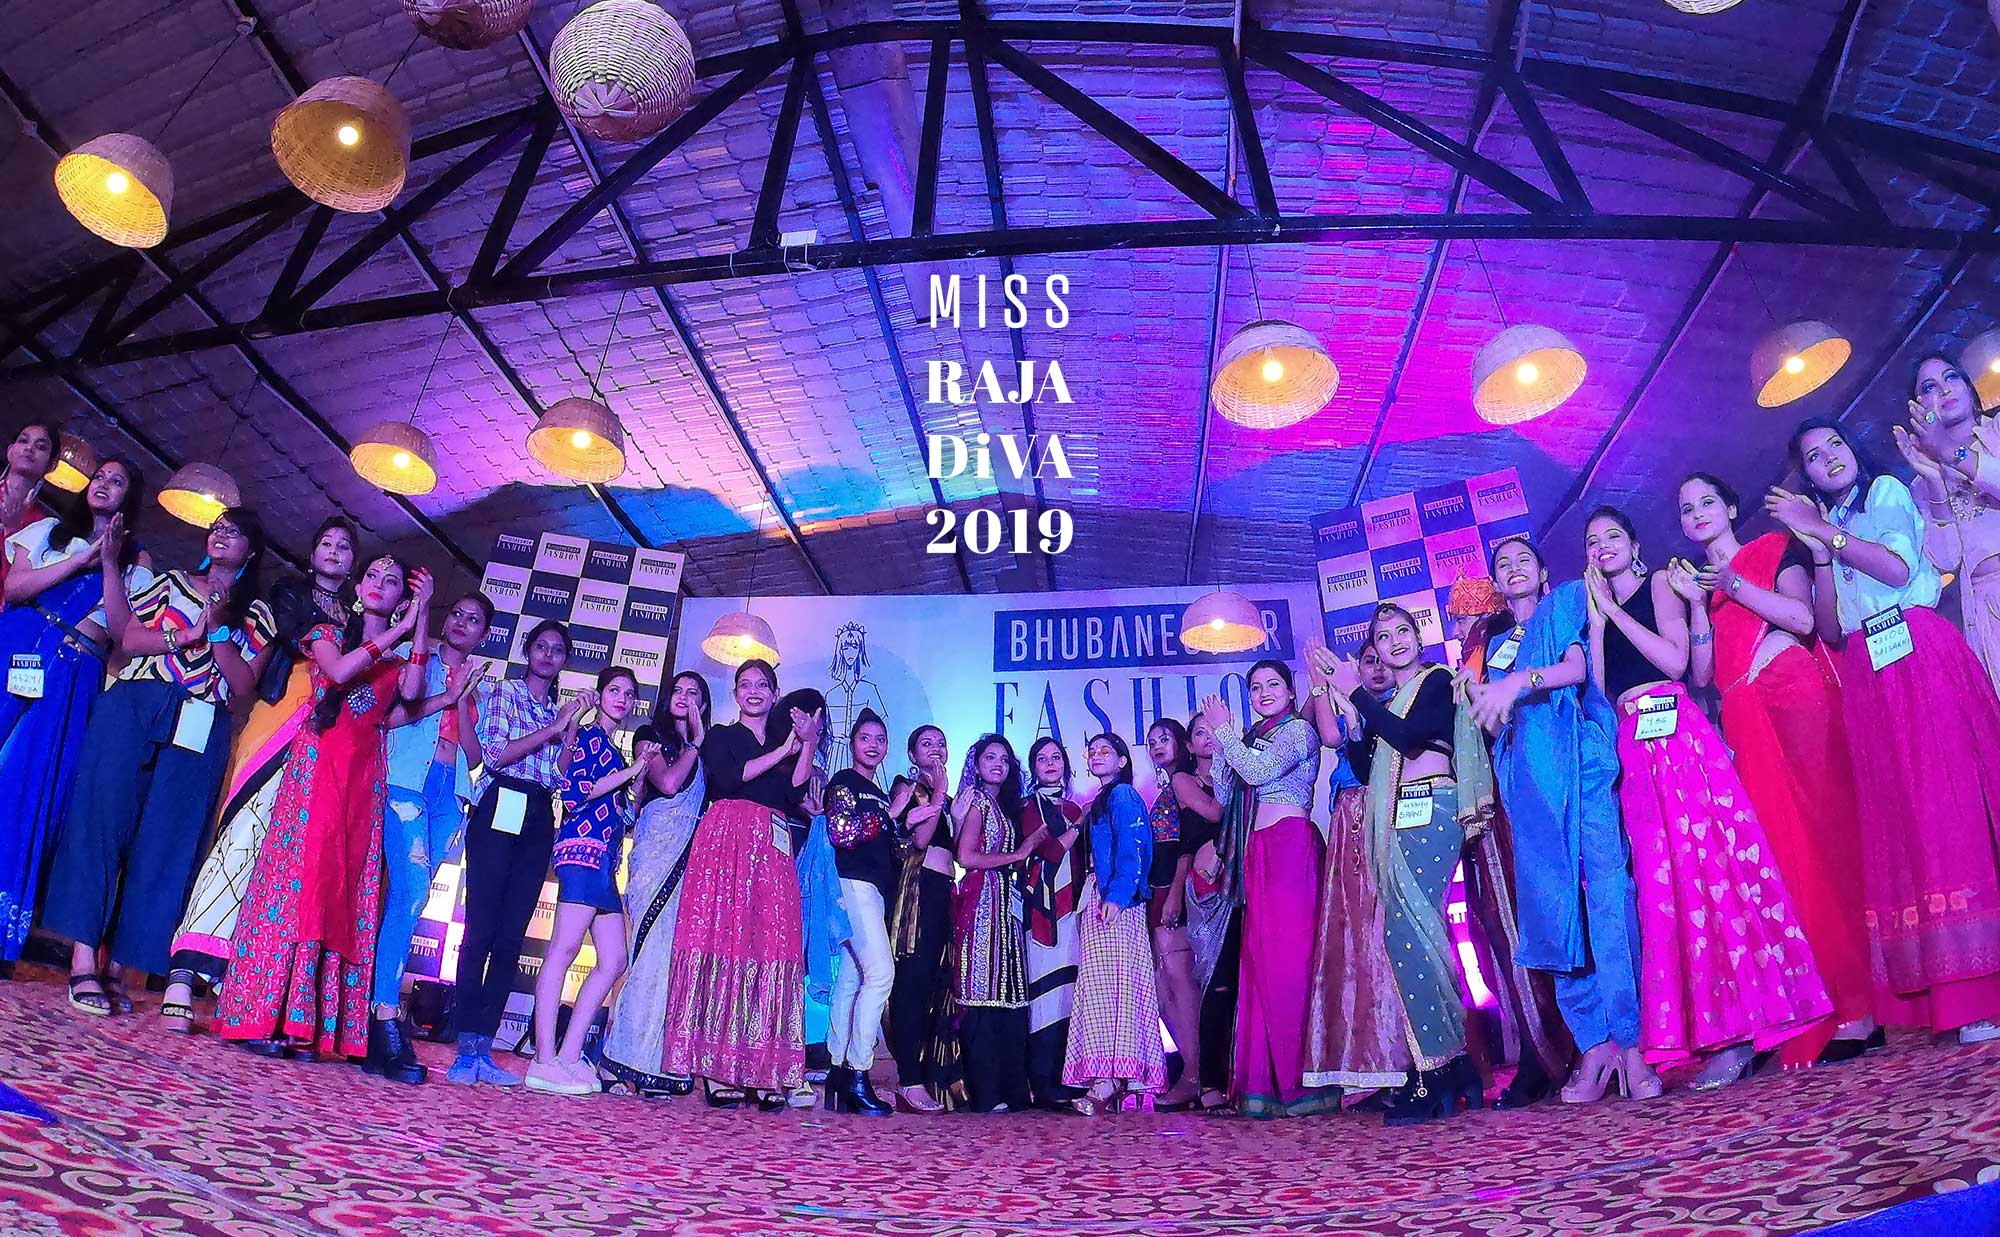 Bhubaneswar Fashion Miss Raja Diva 2019 top 30 Event